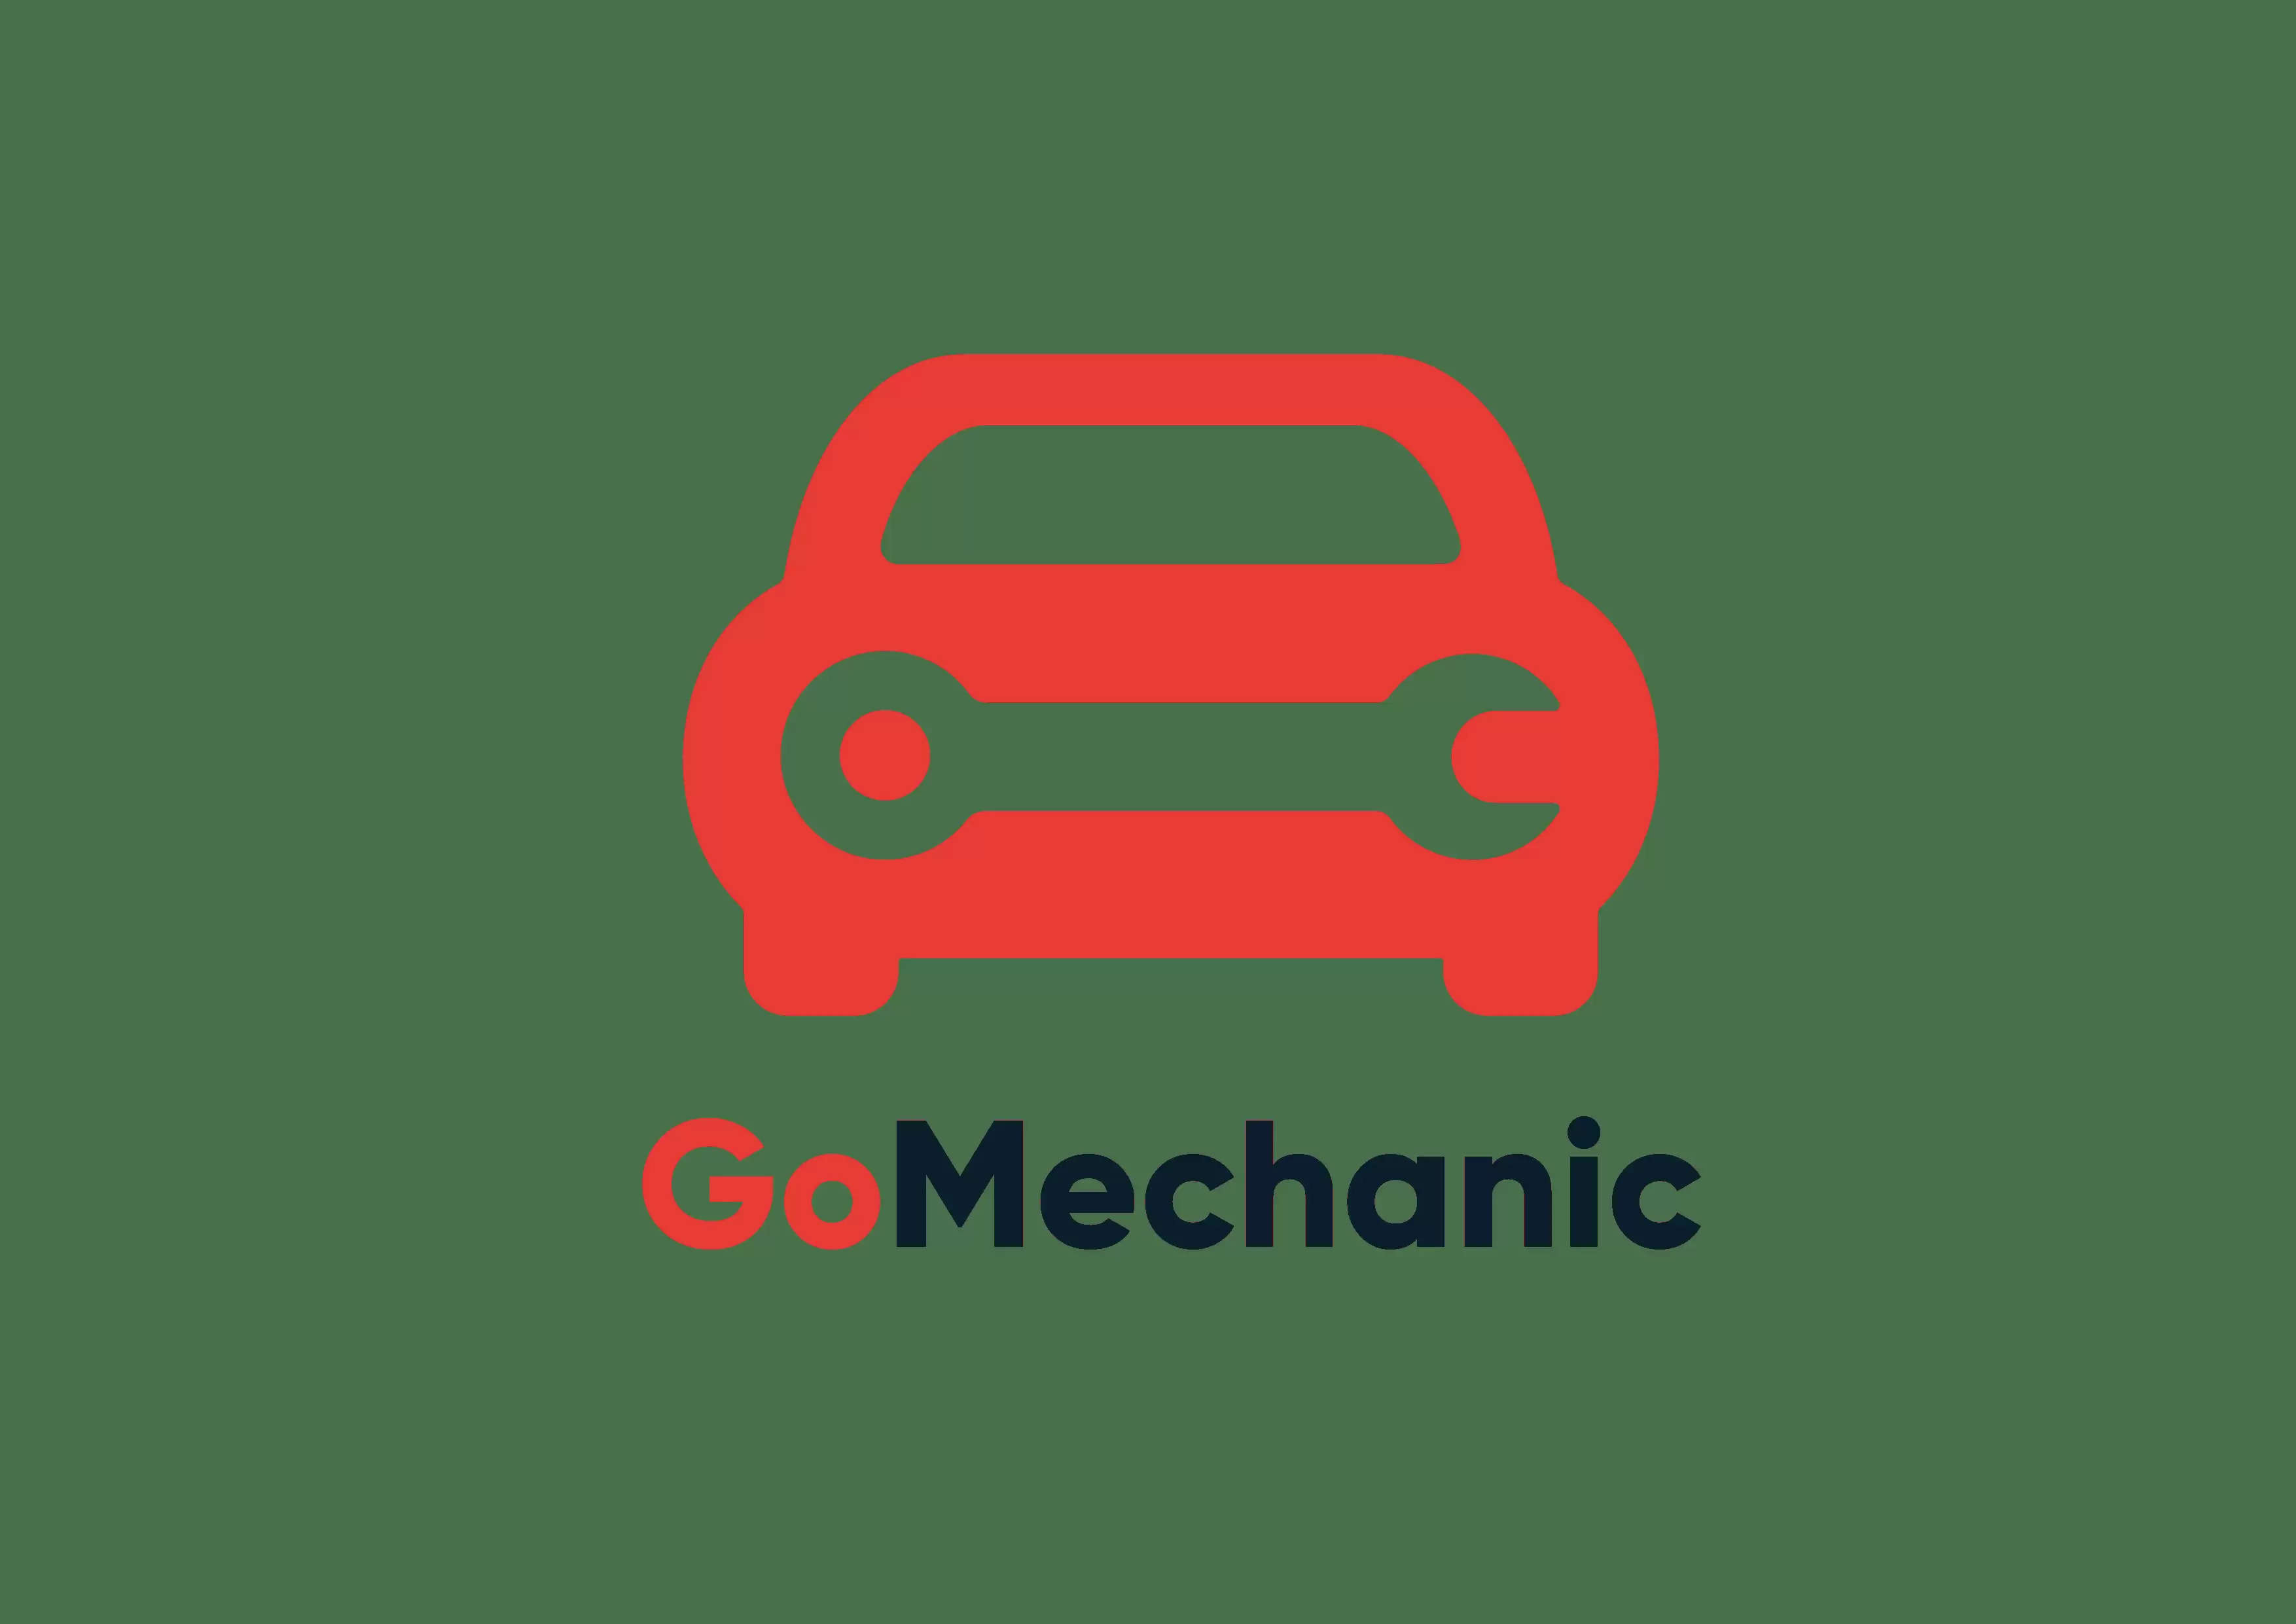 GoMechanic - A storehouse of skilled employees